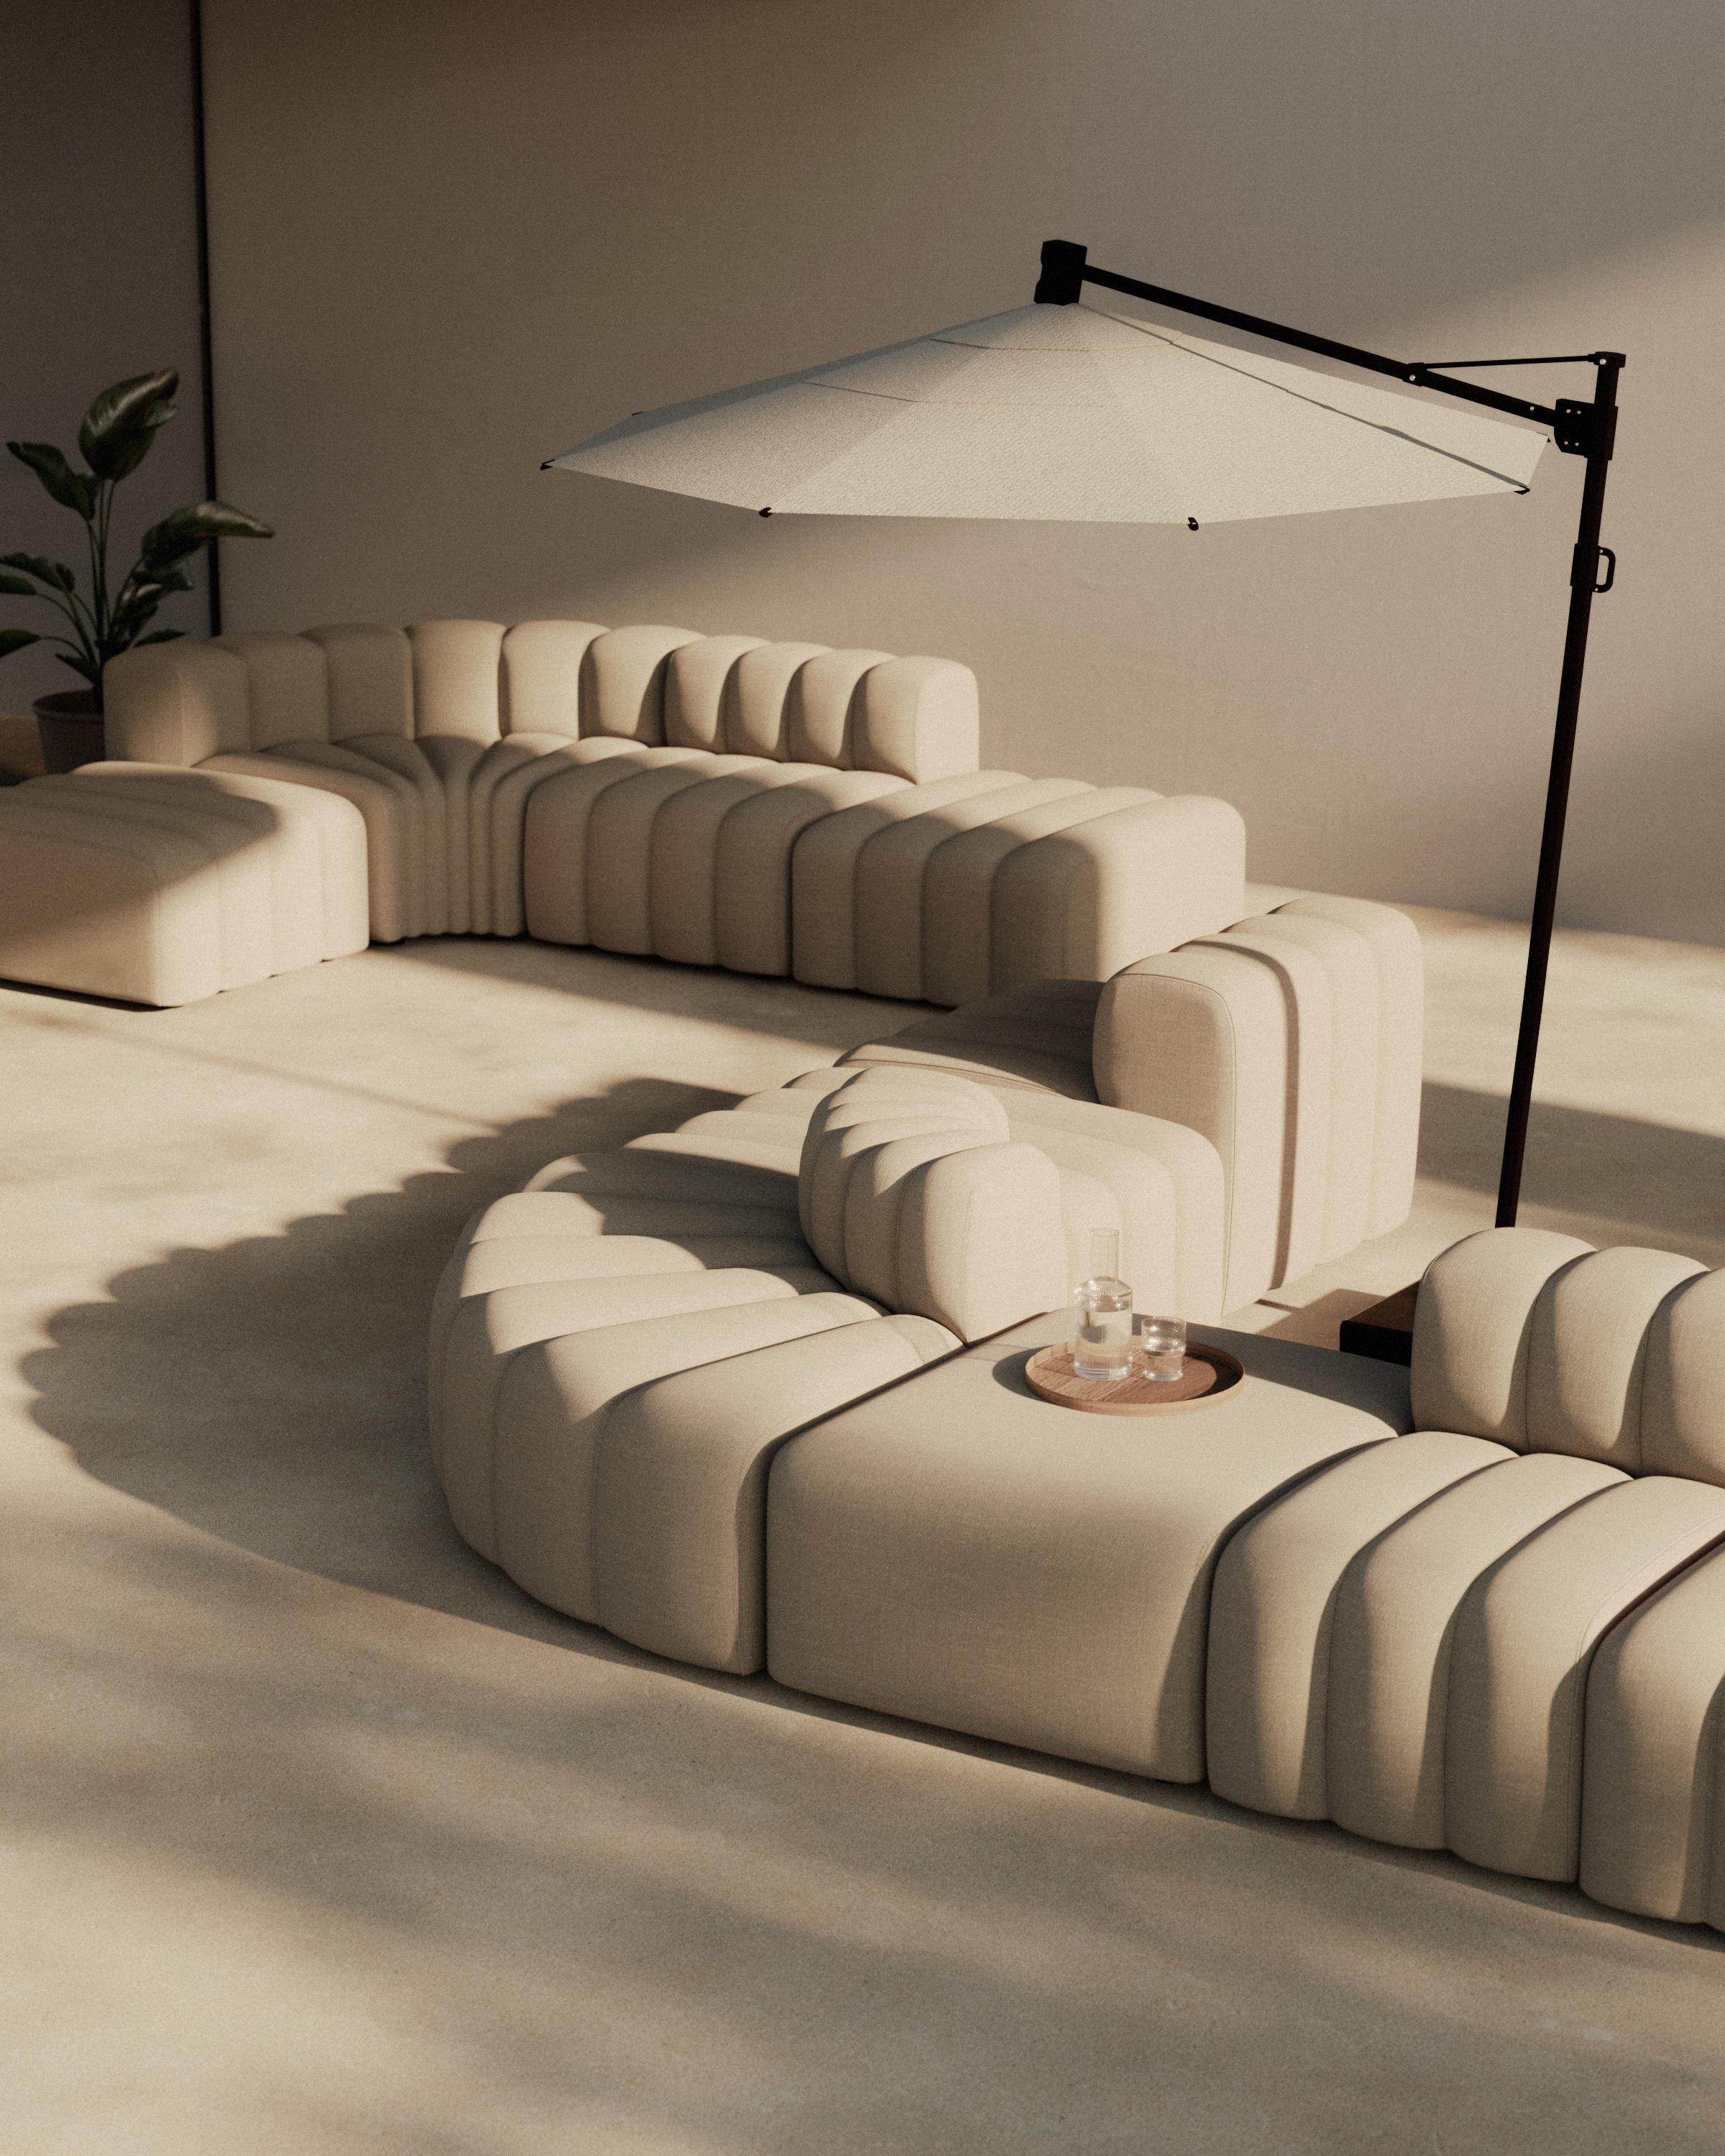 Studio sofa by Kristian Sofus Hansen & Tommy Hyldahl for Nor11
Outdoor version 

Setup 5 (1x small,1x medium,1x large, 1x corner, 2x ottoman, 2x ottoman classic, 3x armrest):
L230-280cm & 220cm / P96cm / H70cm / Seating H42cm

Modular sofa: assemble